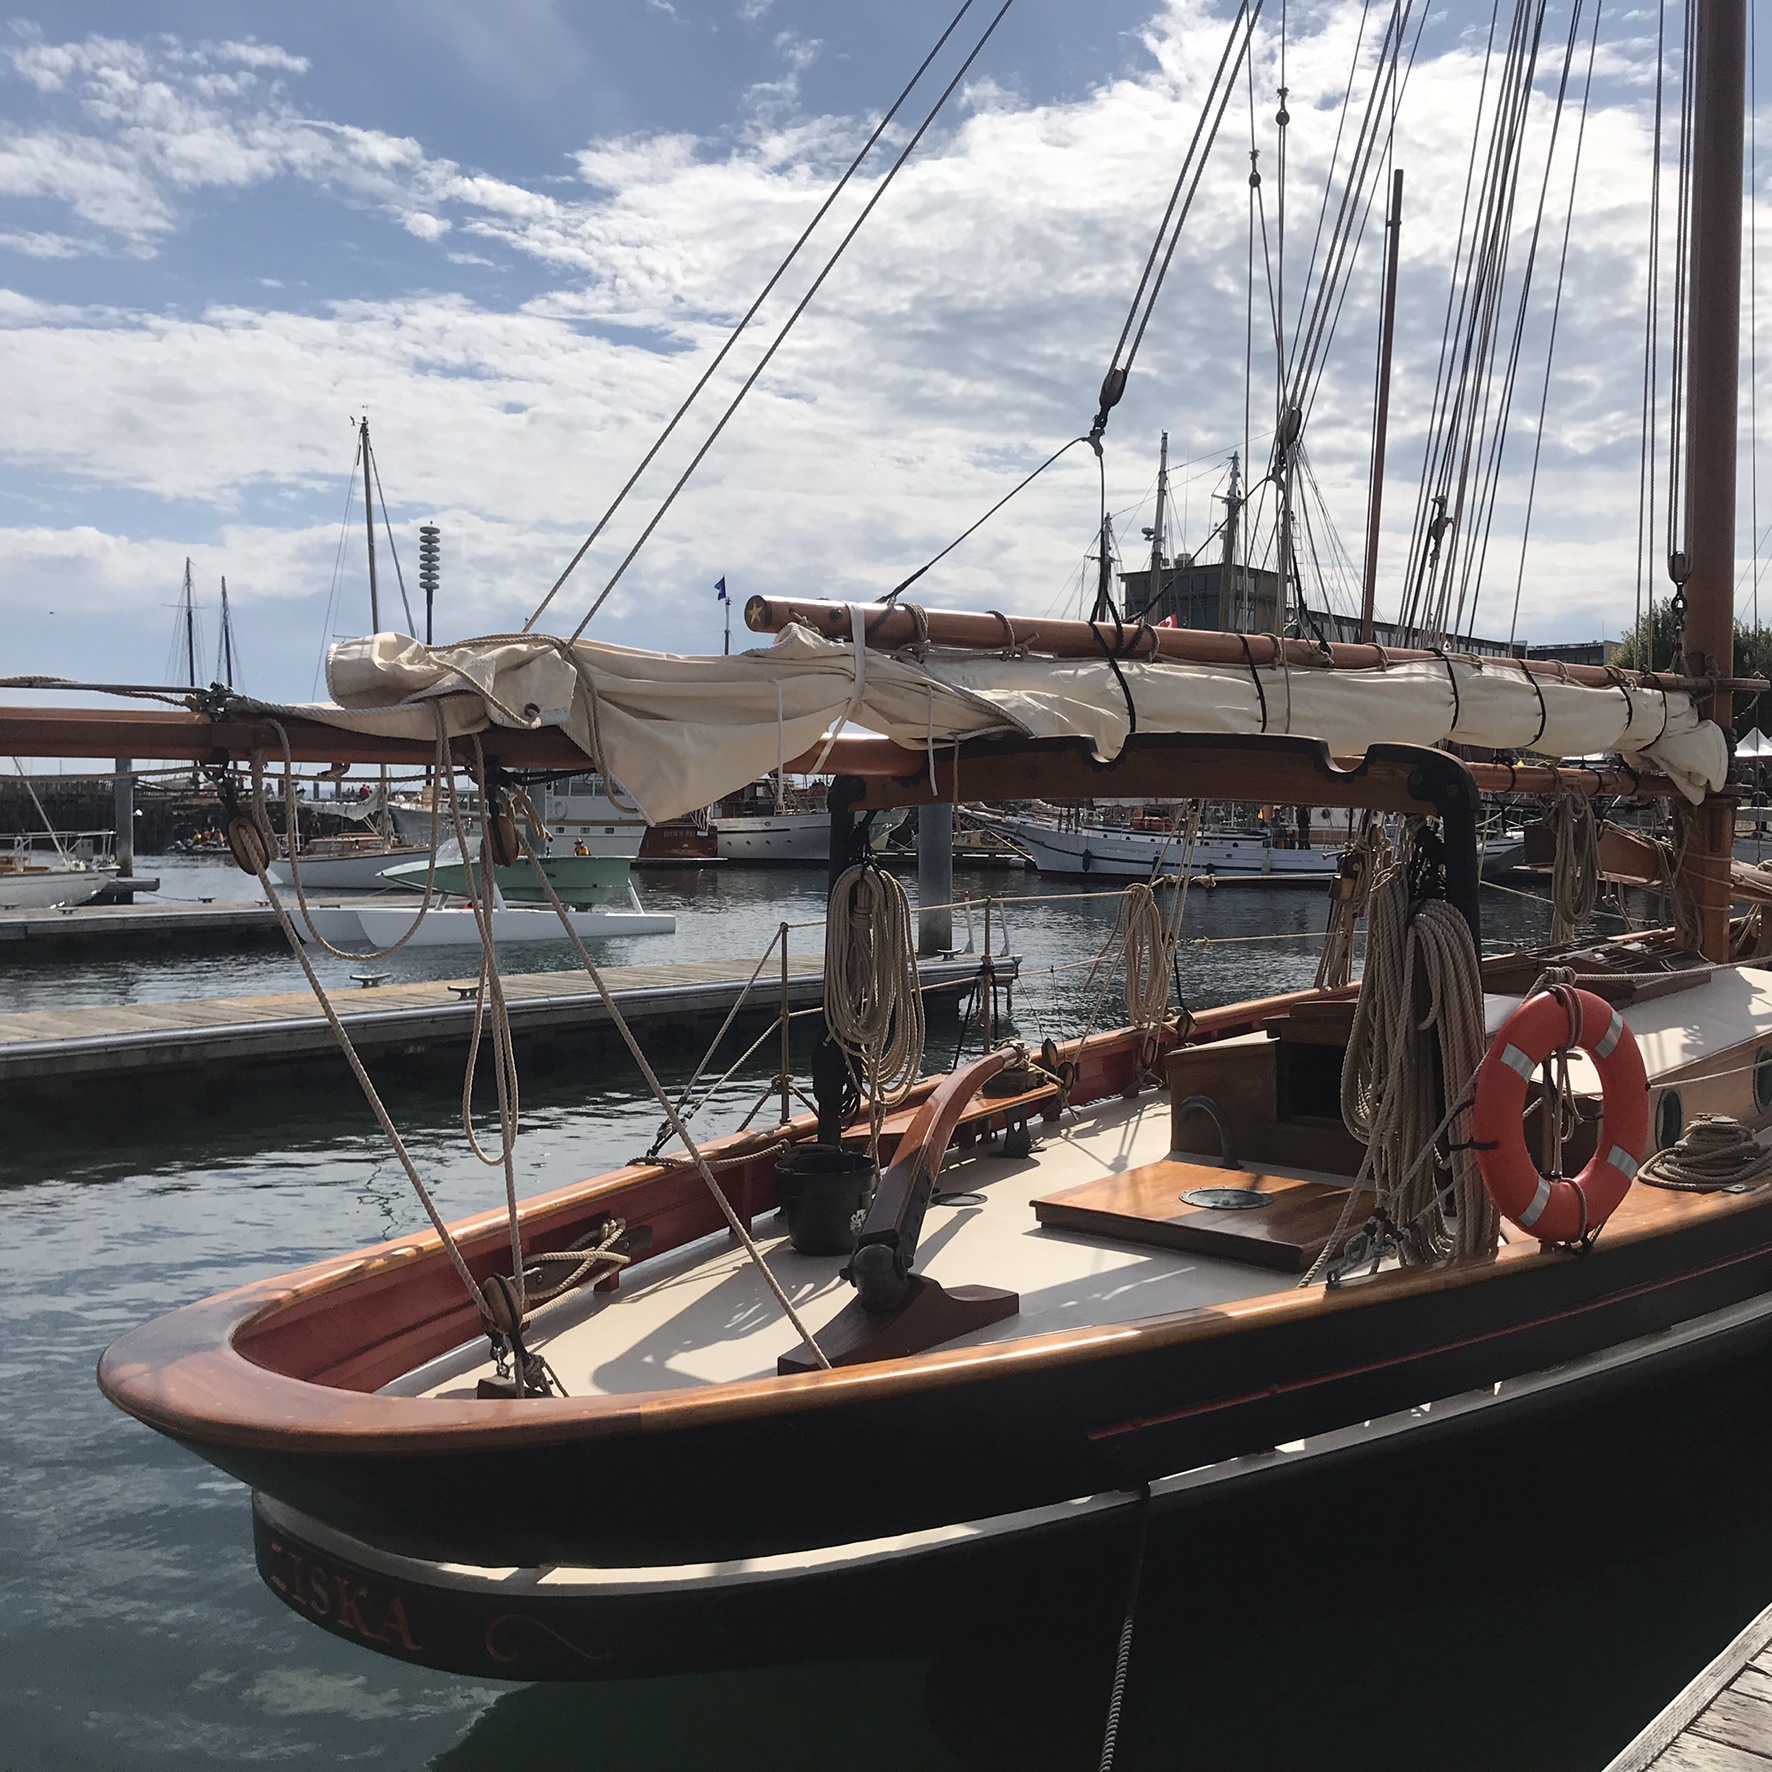 port townsend wooden boat festival 2019